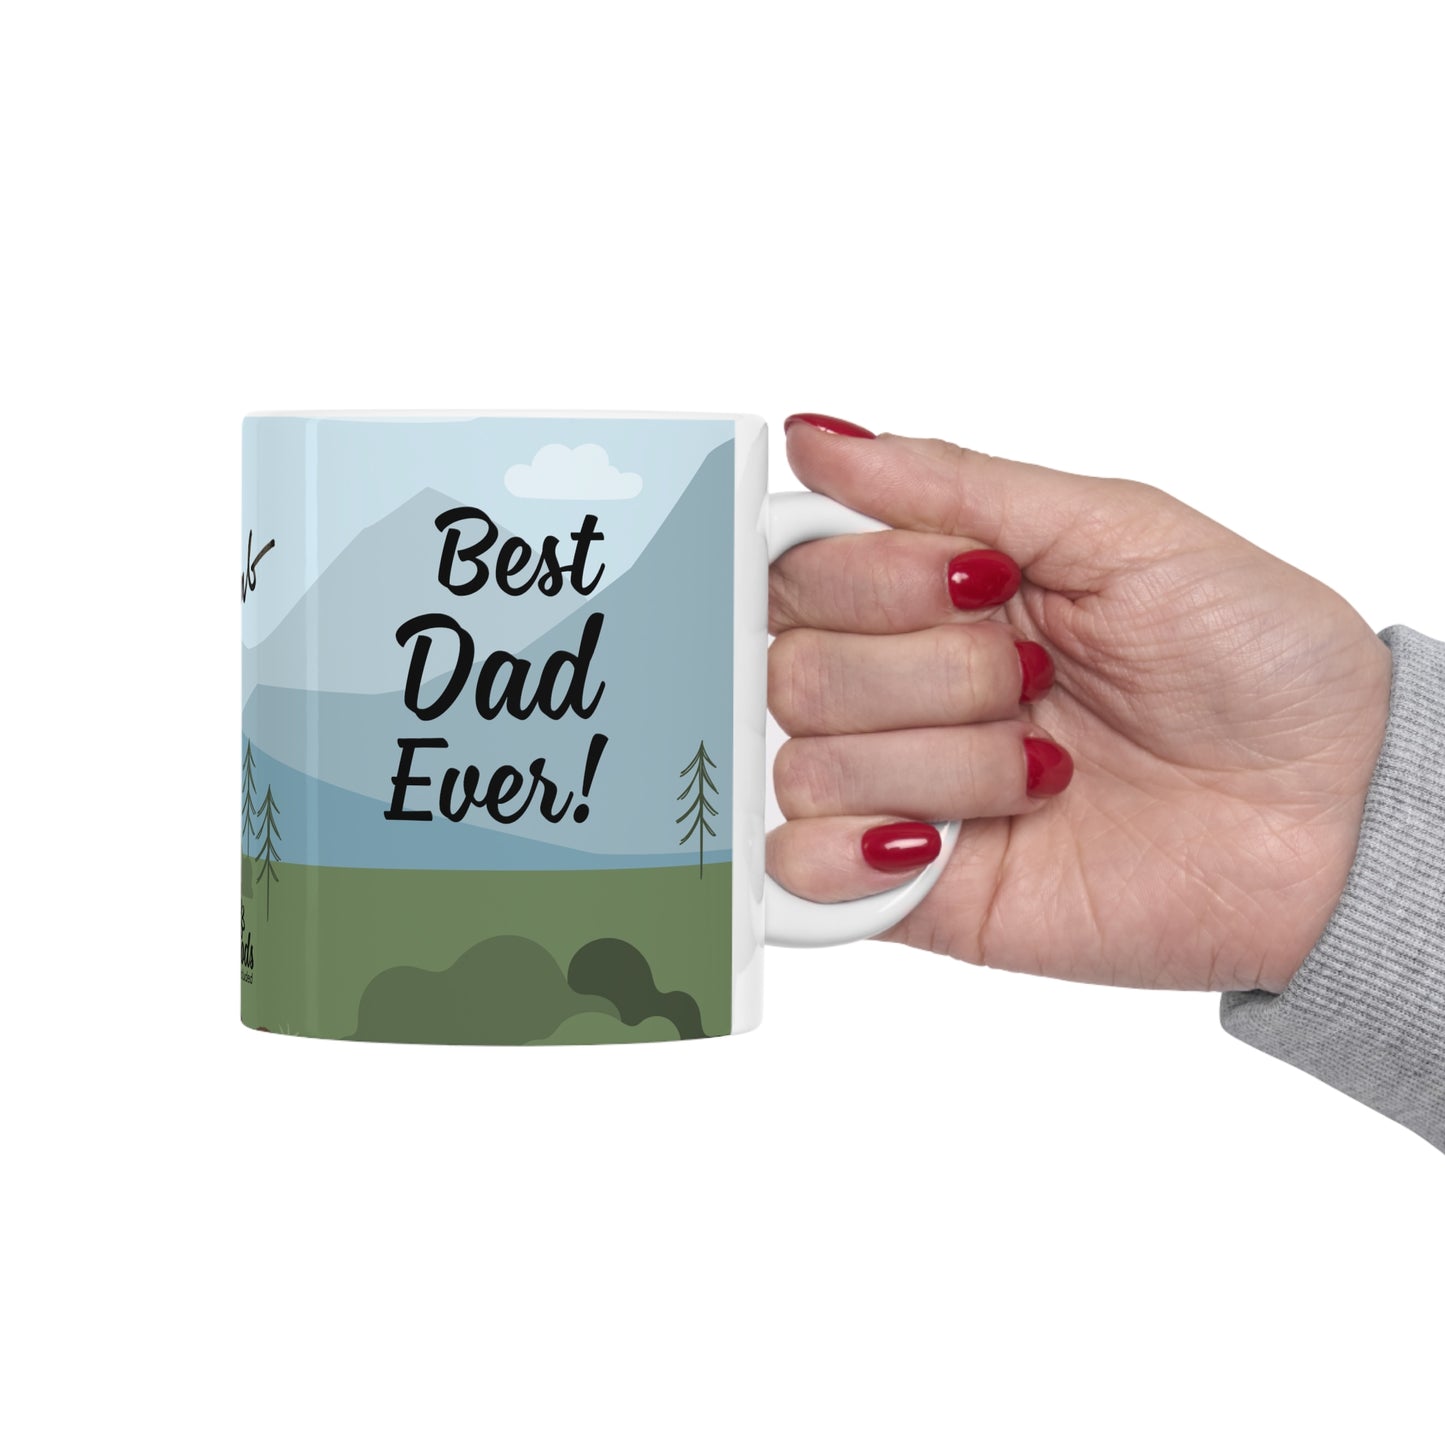 PlumbGoods Best Dad Mug